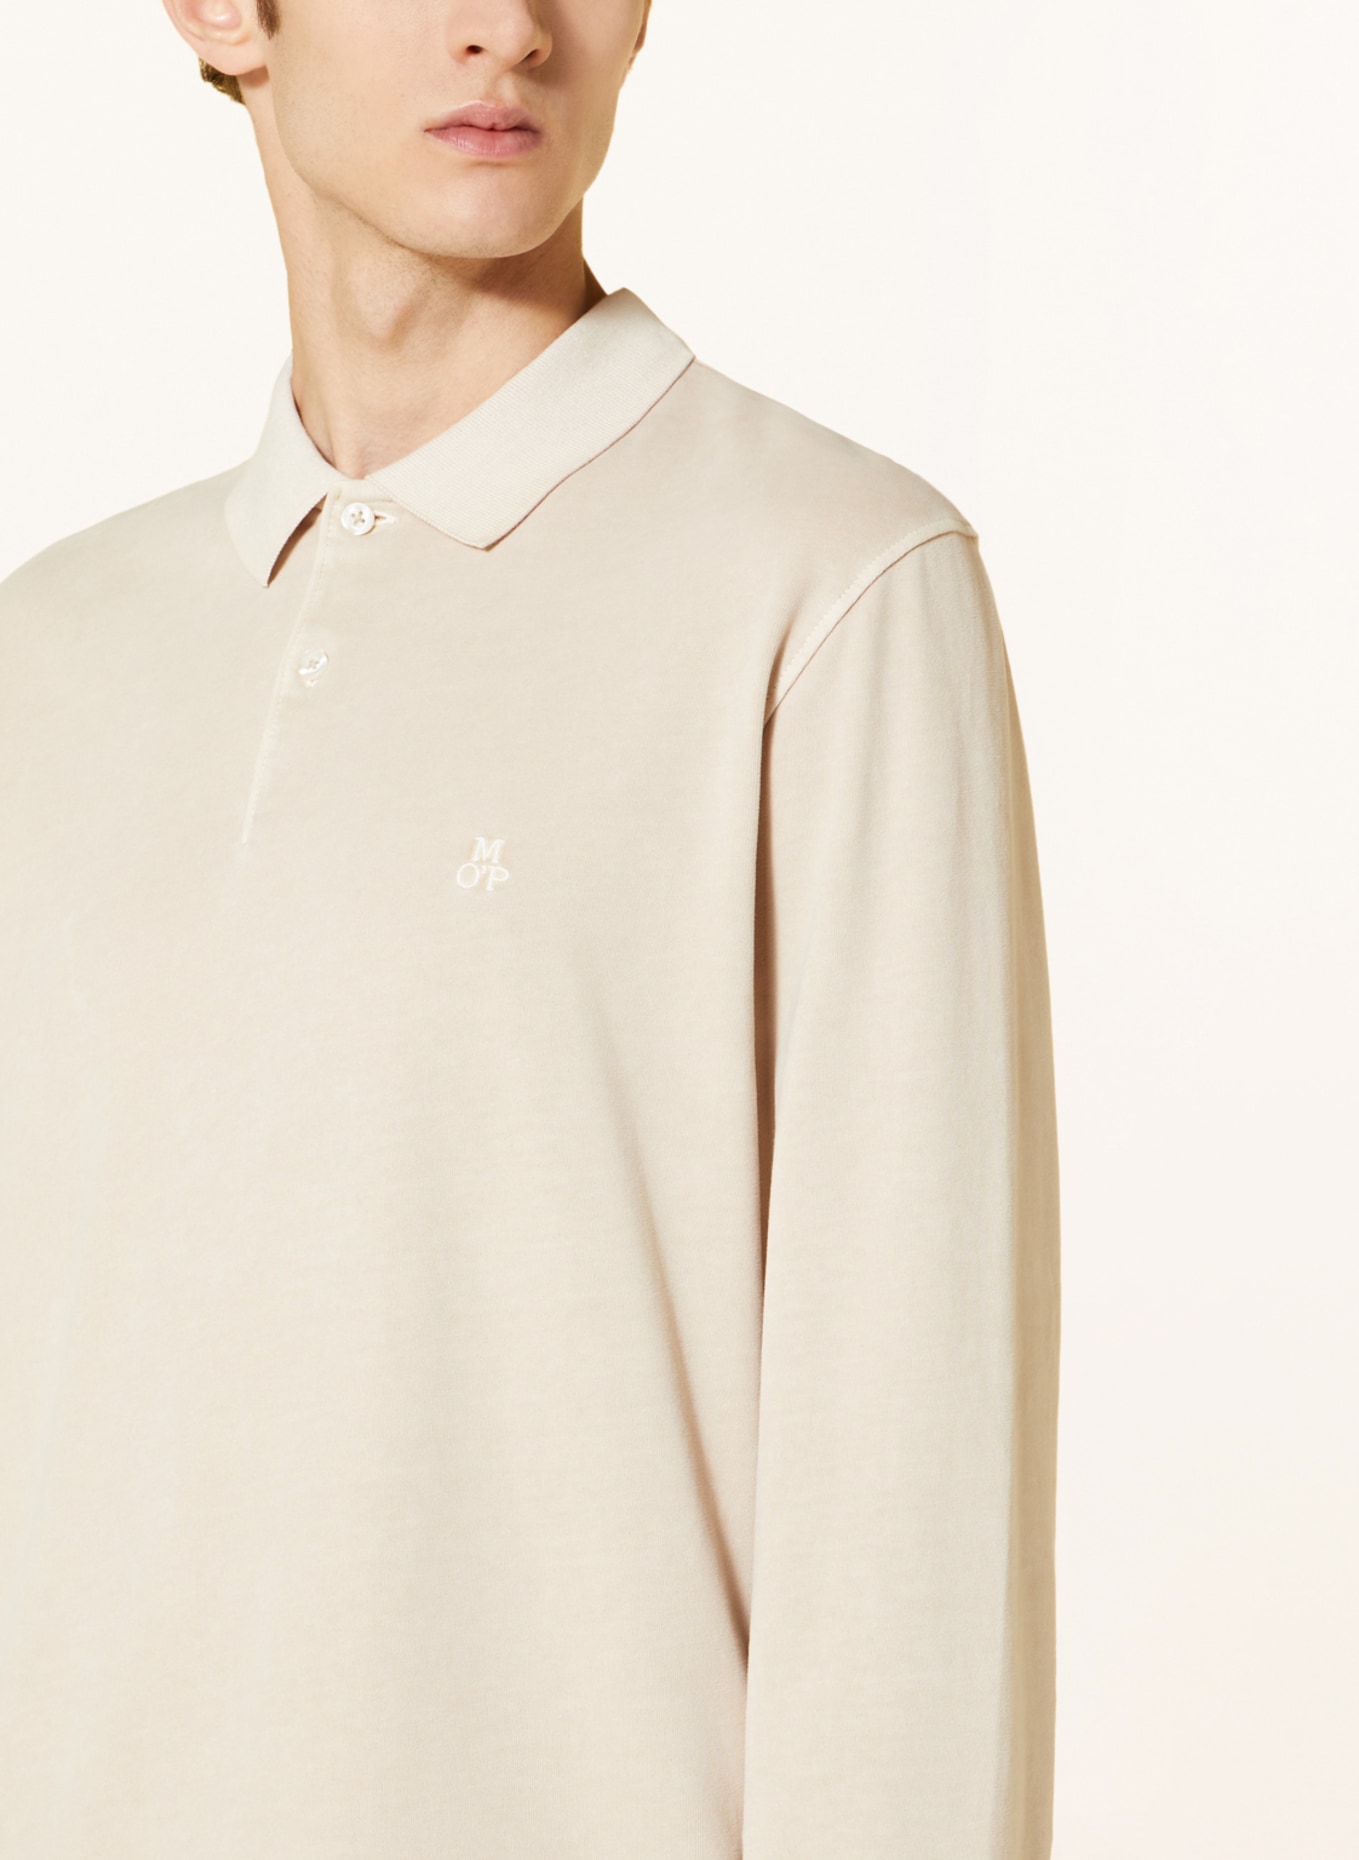 Marc O'Polo Sweatshirt fabric polo shirt regular fit in cream